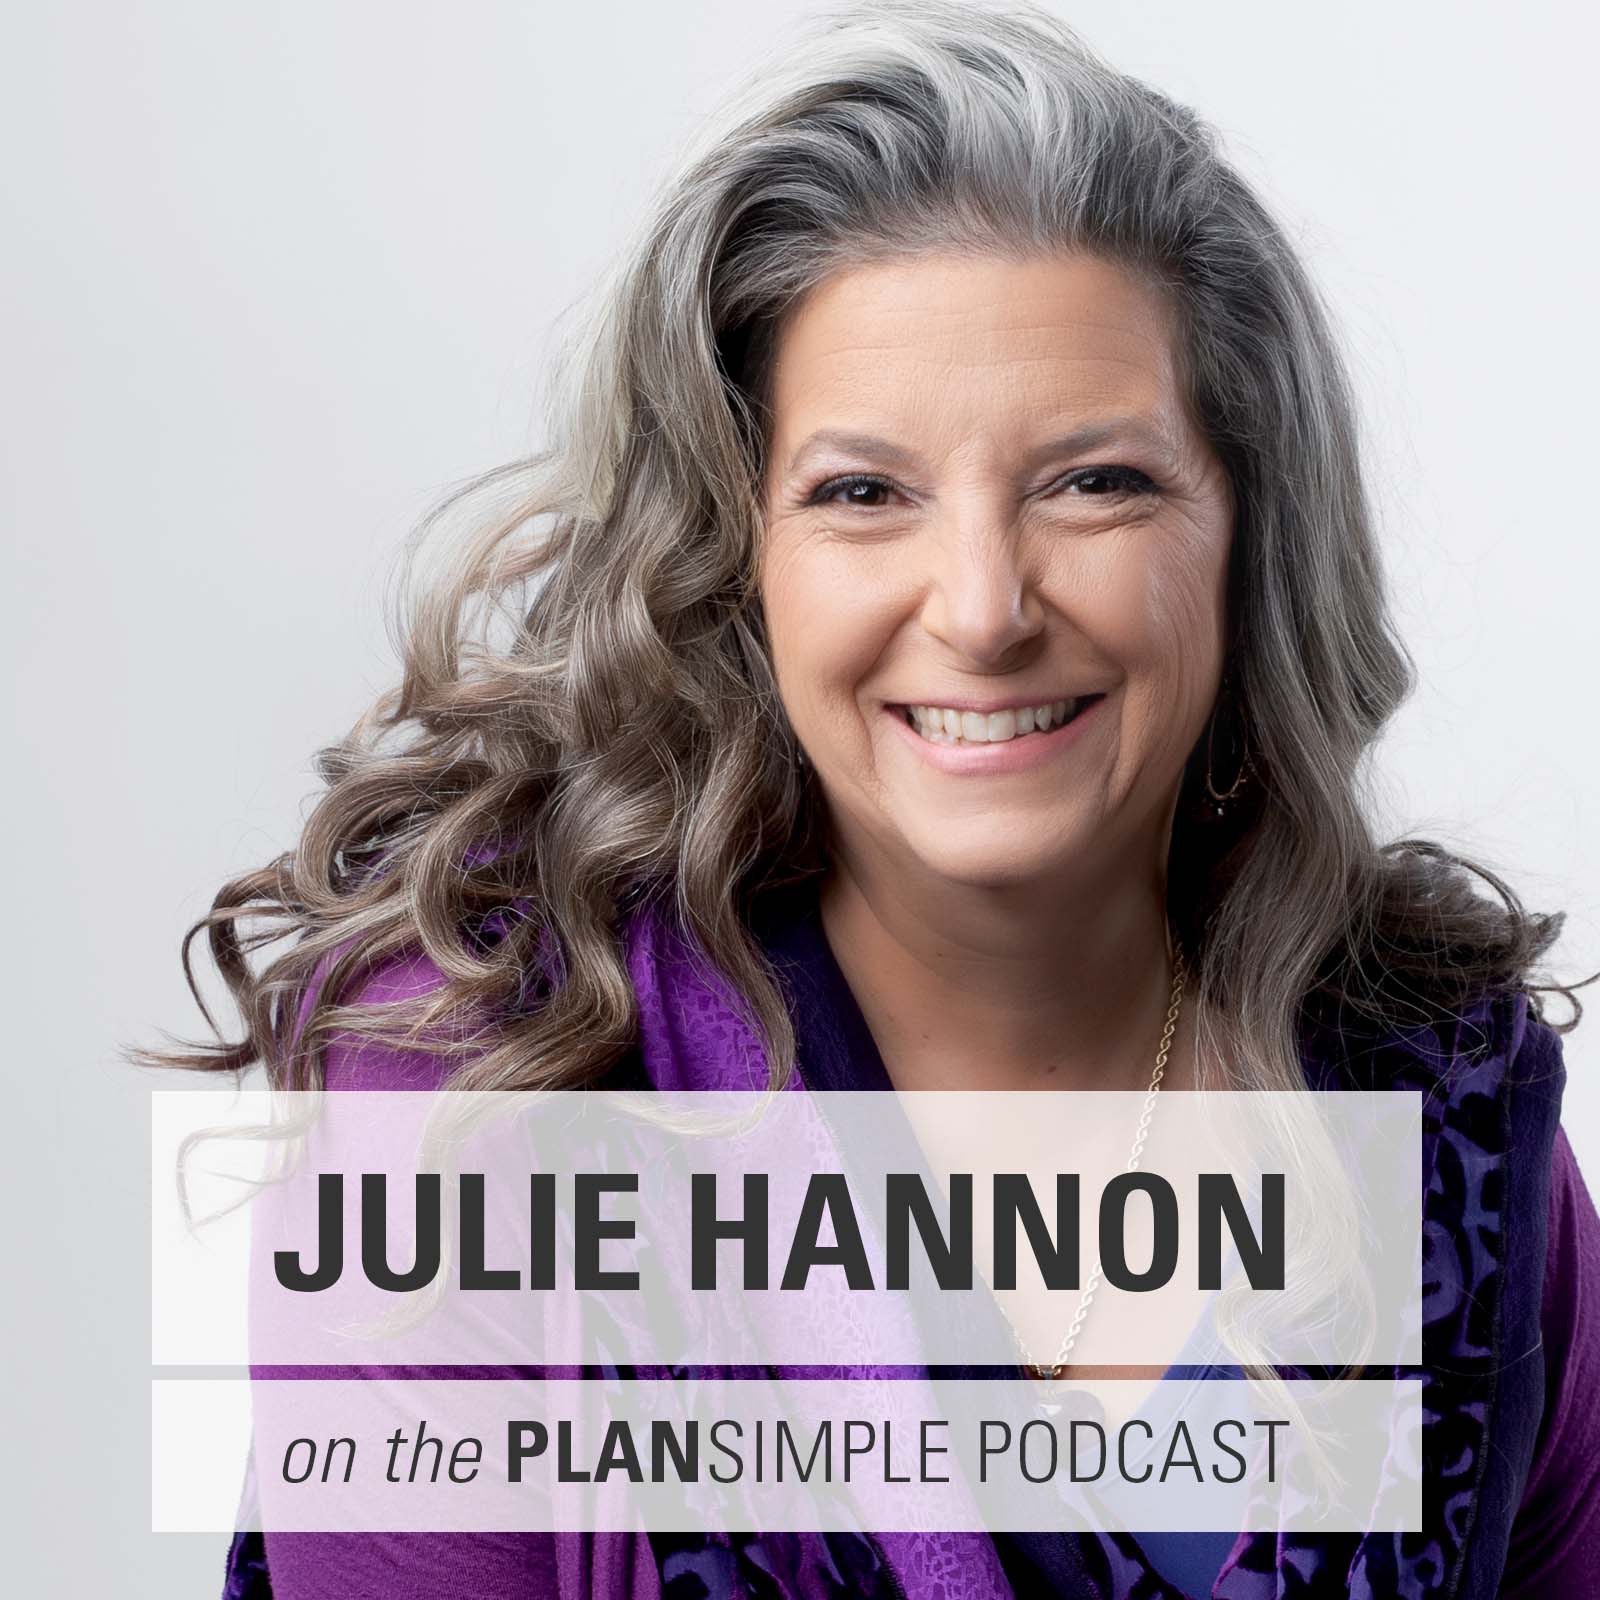 Leave Room For Spirit With Julie Hannon